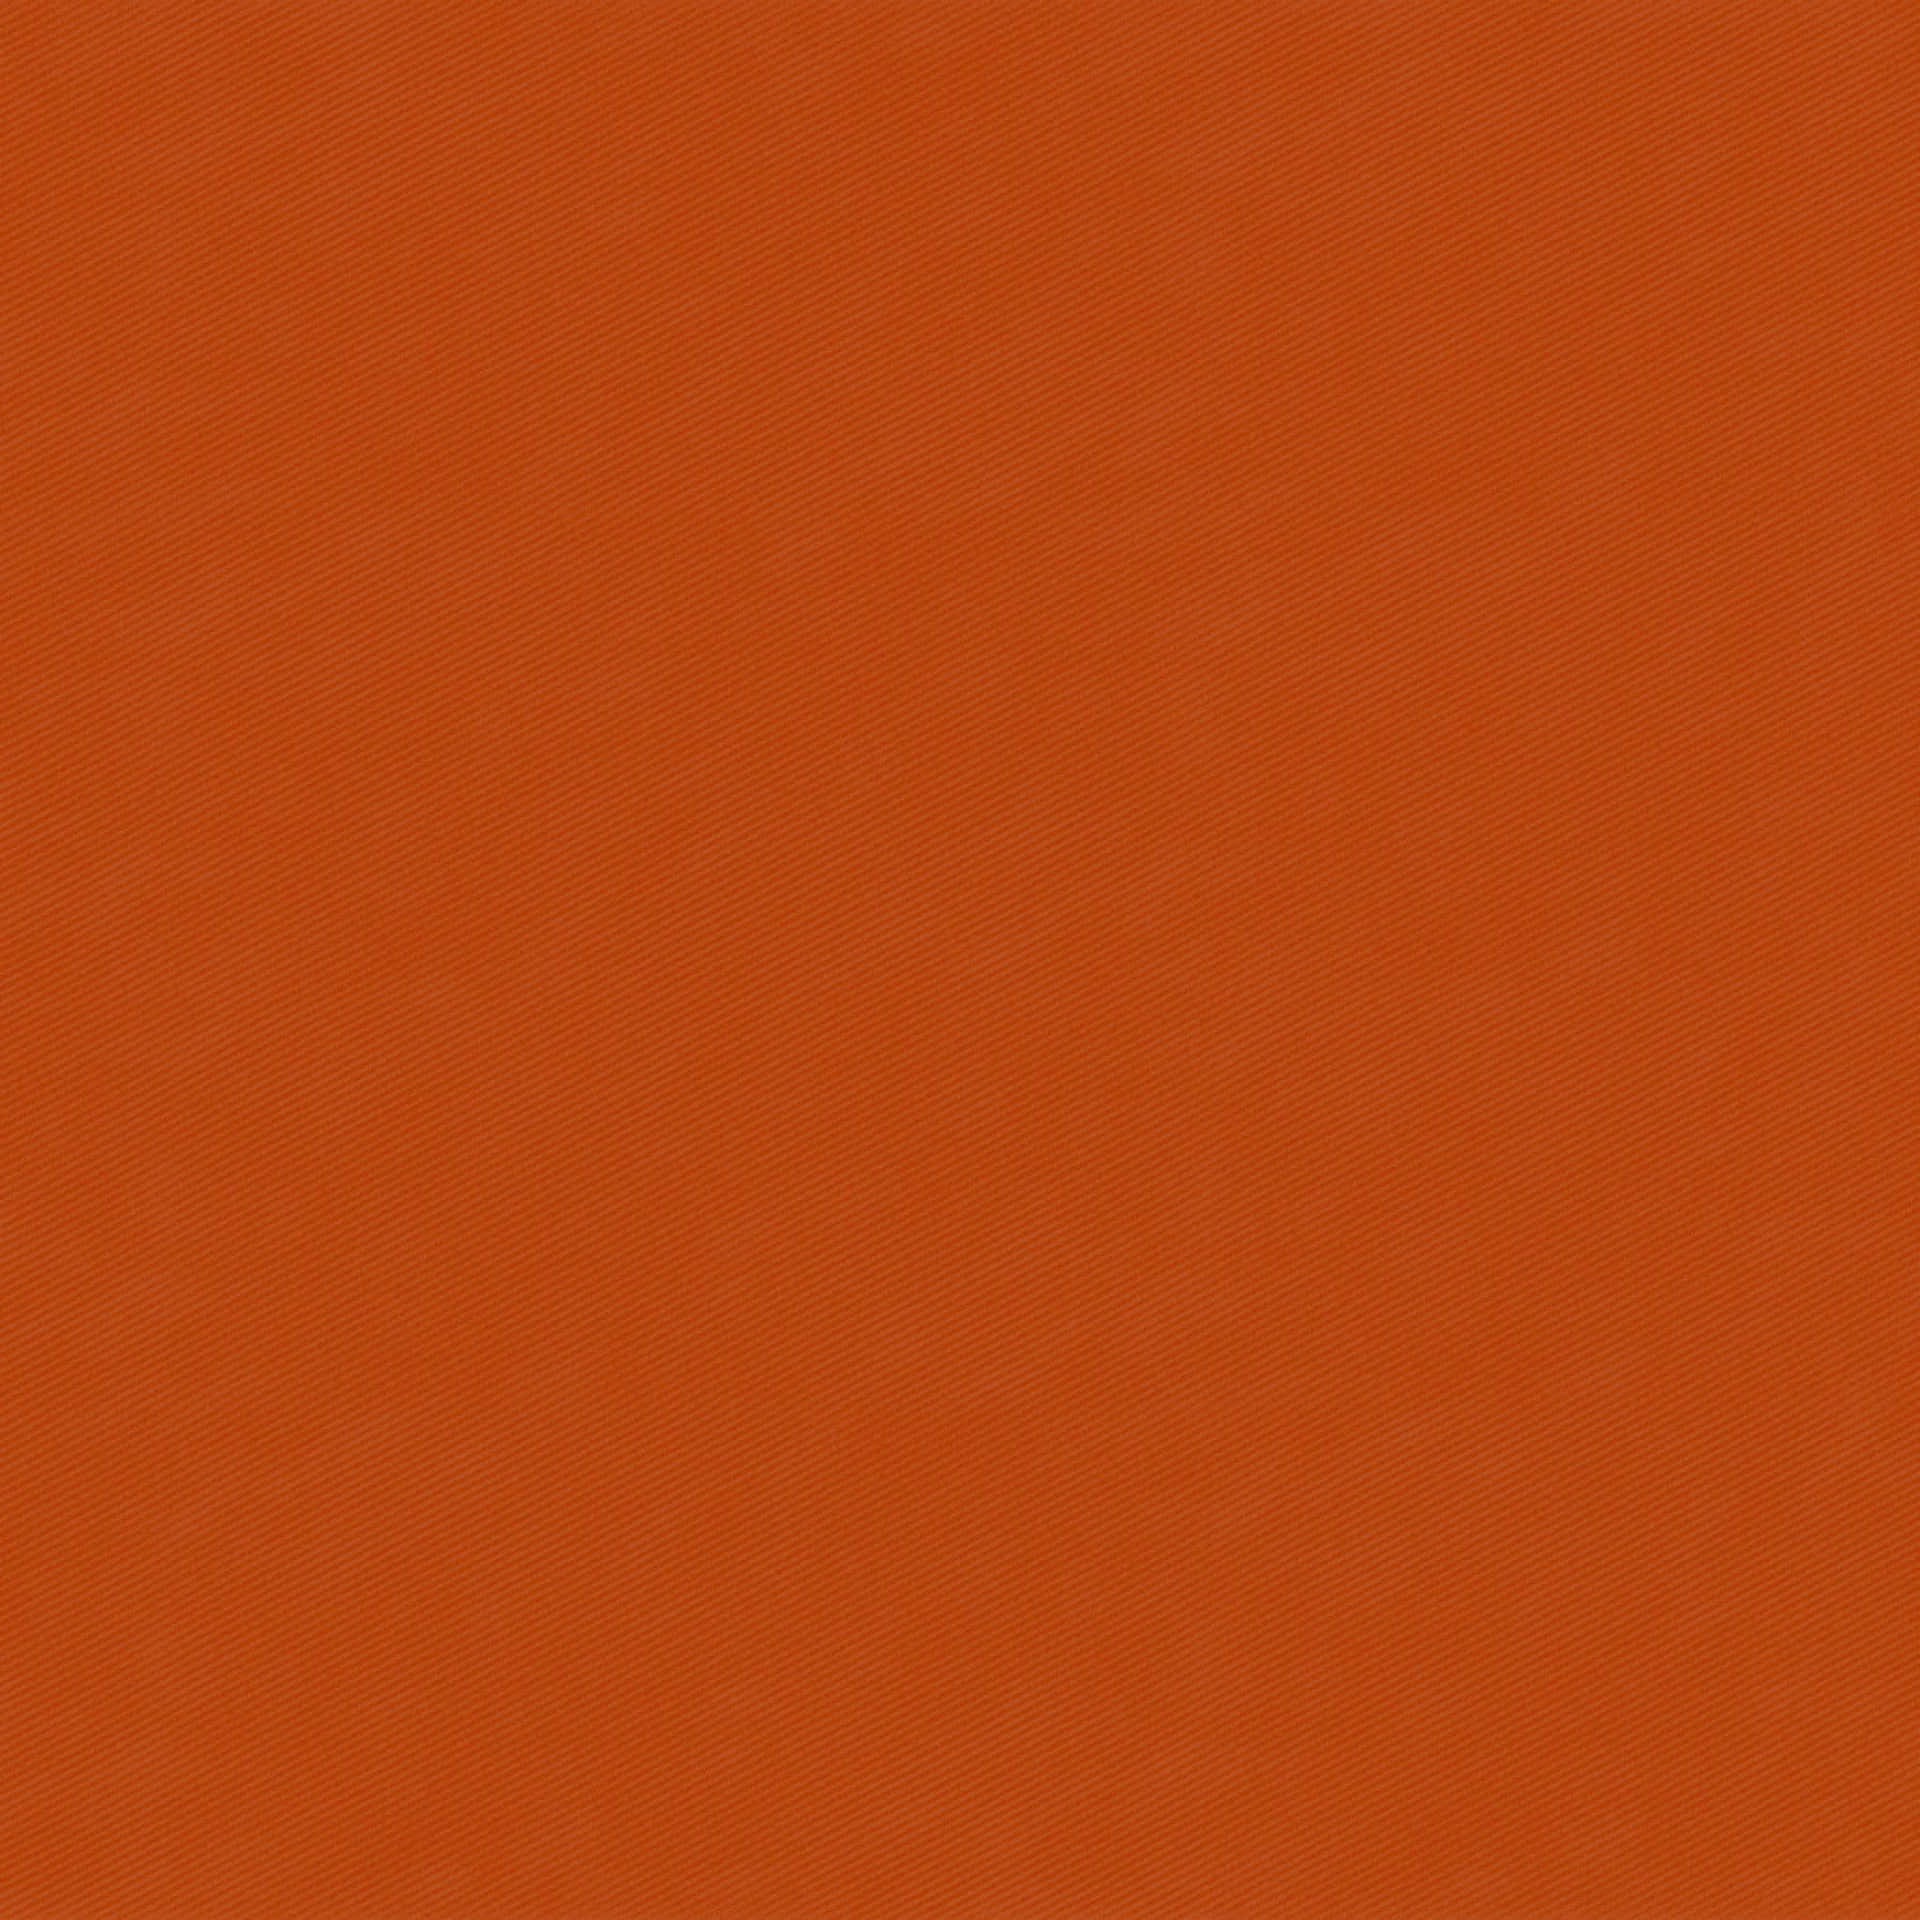 Plain Dark Orange Fabric Wallpaper and Home Decor  Spoonflower